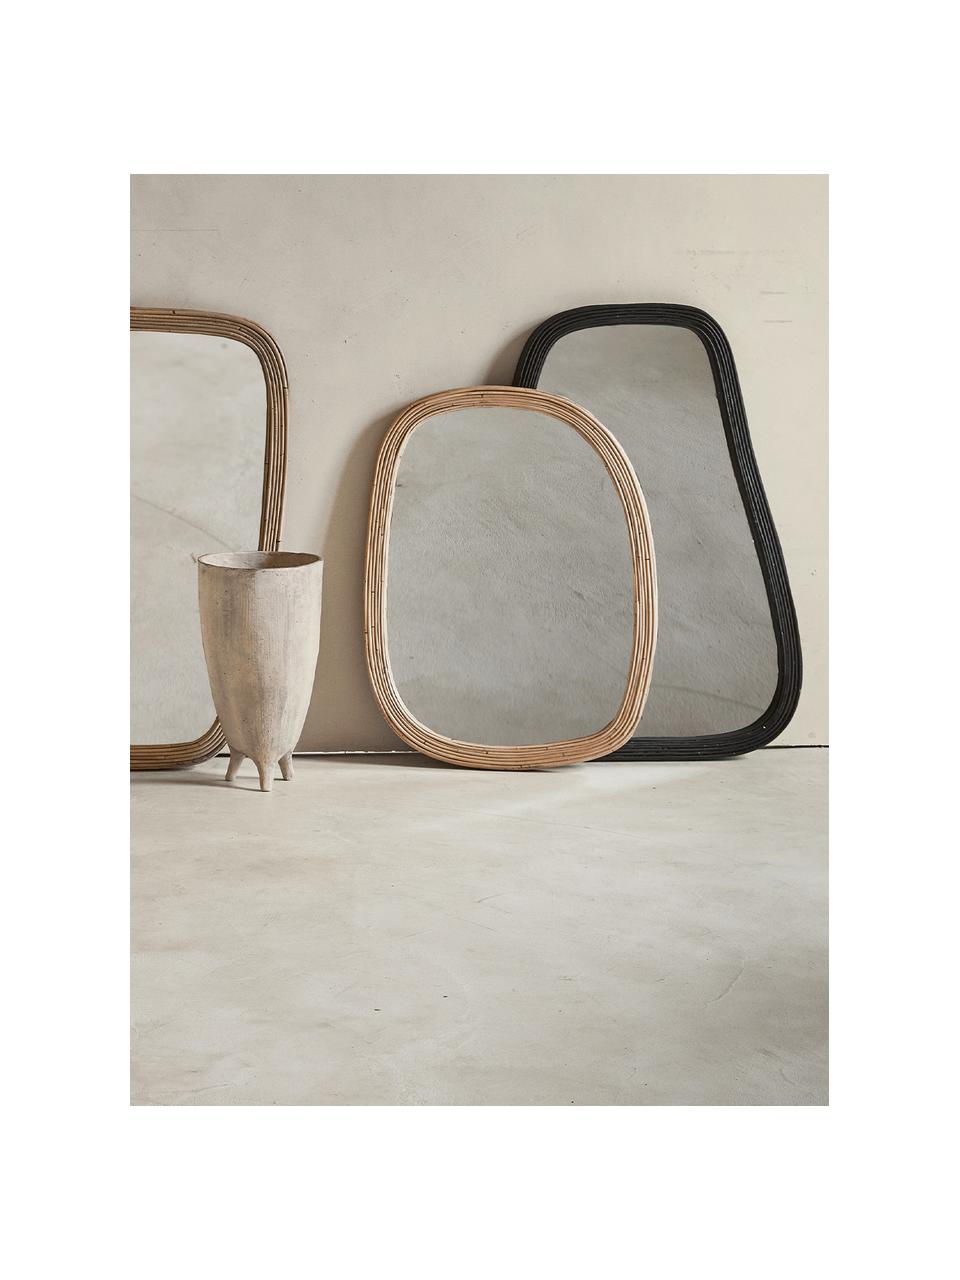 Espejo de pie artesanal de ratán Organic, Espejo: cristal, Negro, An 61 x Al 120 cm